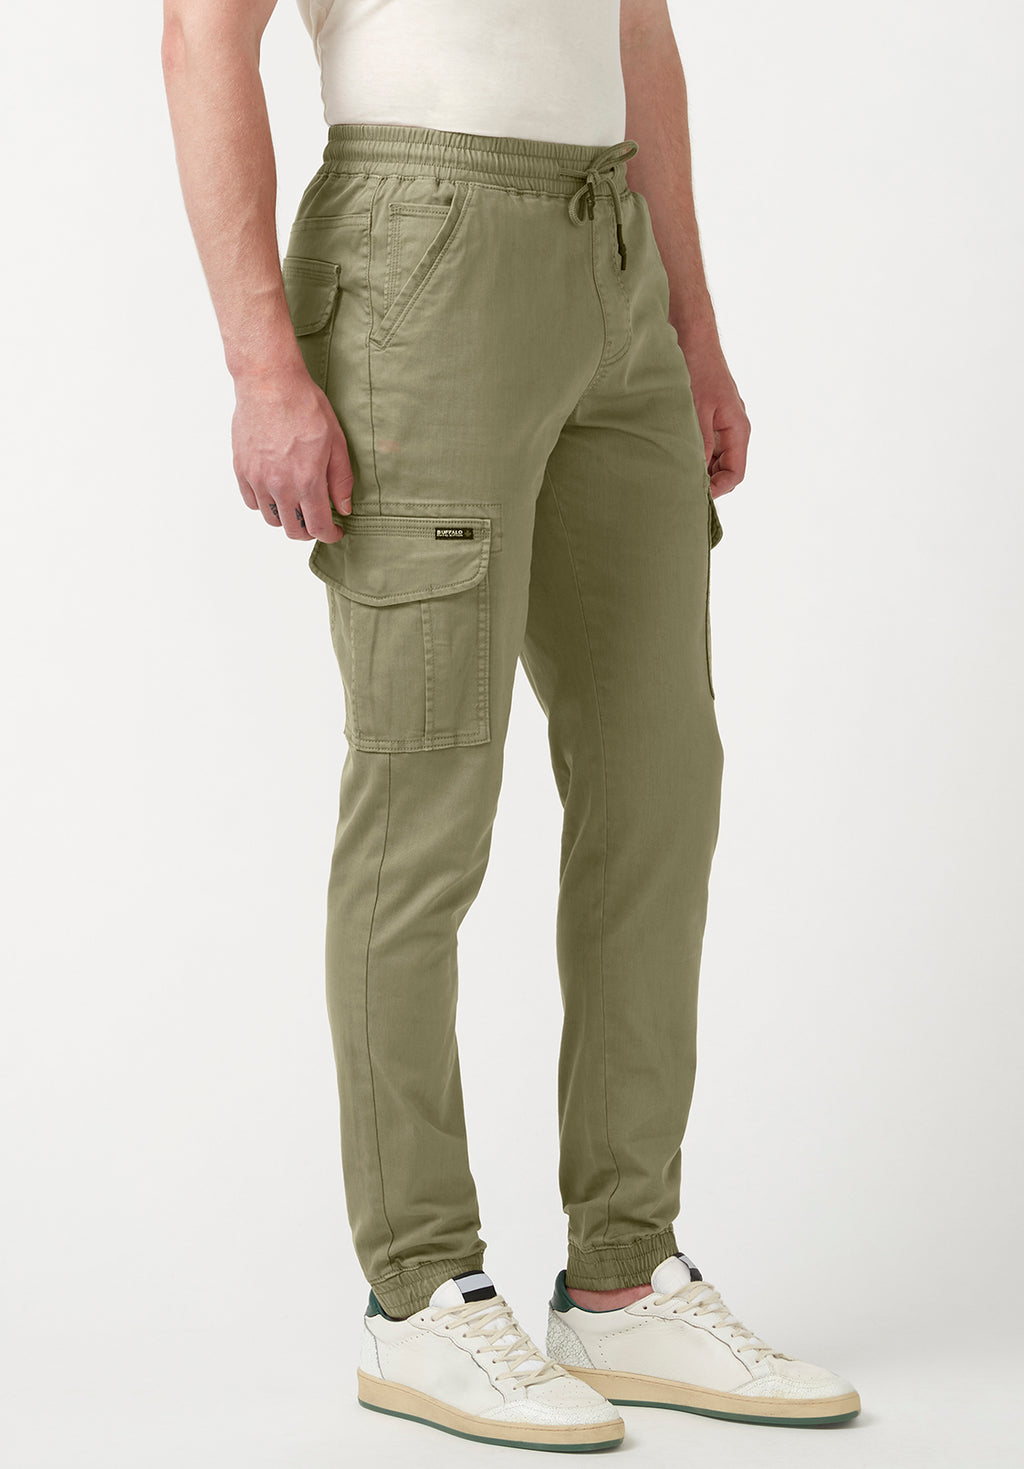 Olive Green Trouser Pants - Trousers - Woven Pants - Dress Pants - Lulus